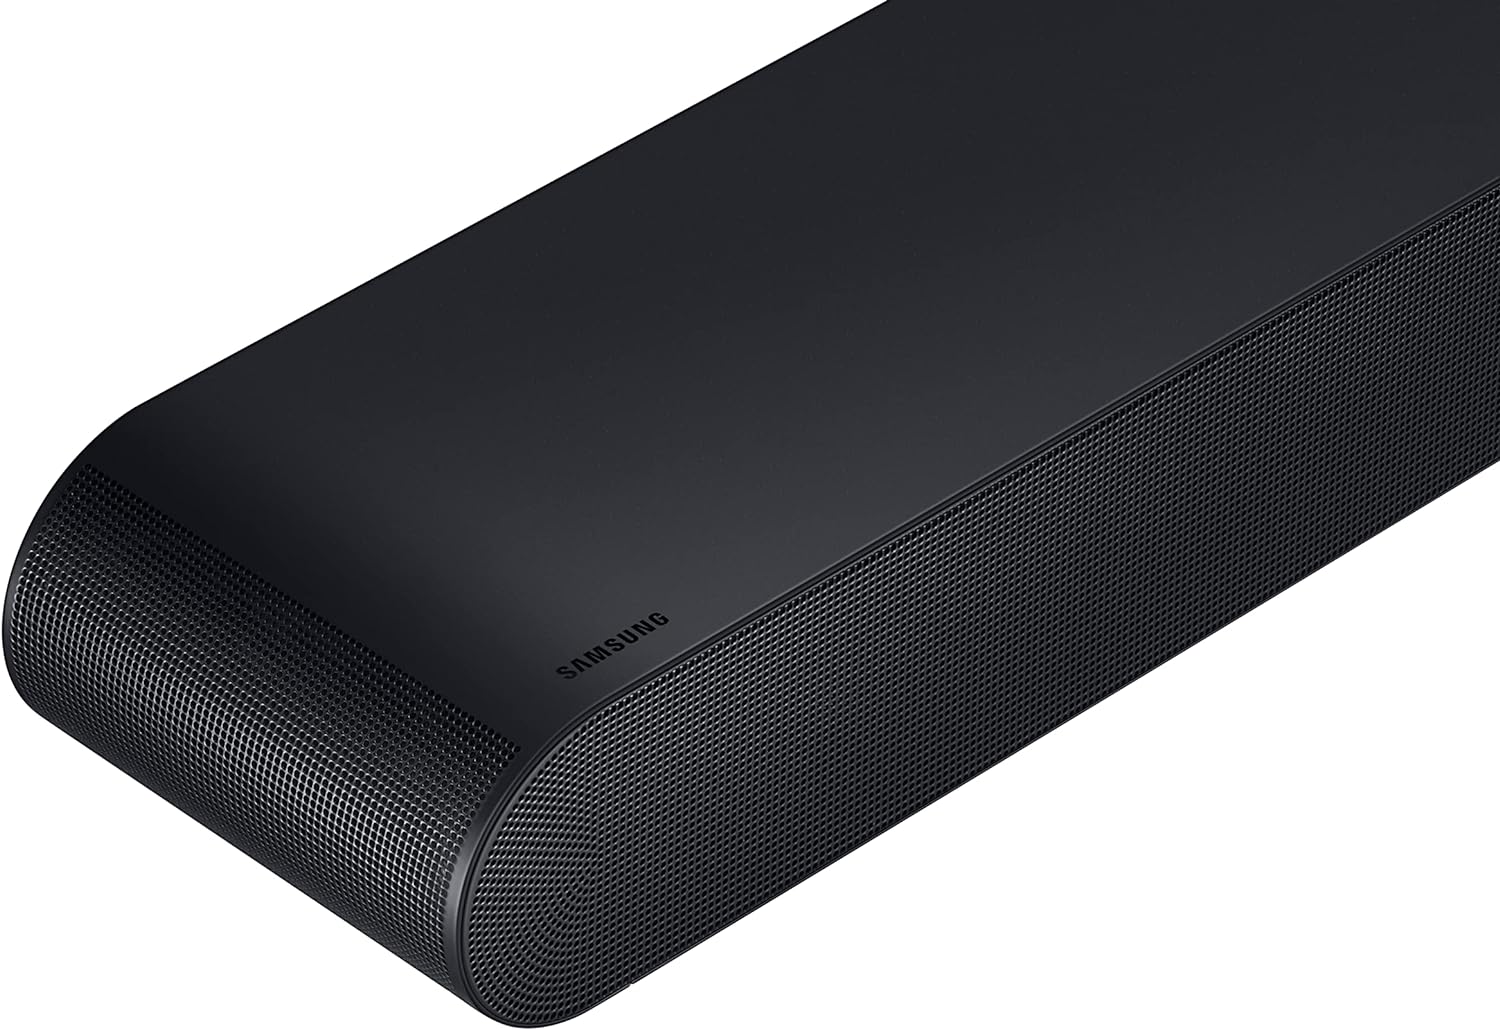 Samsung Barra de Sonido con Dolby Atmos